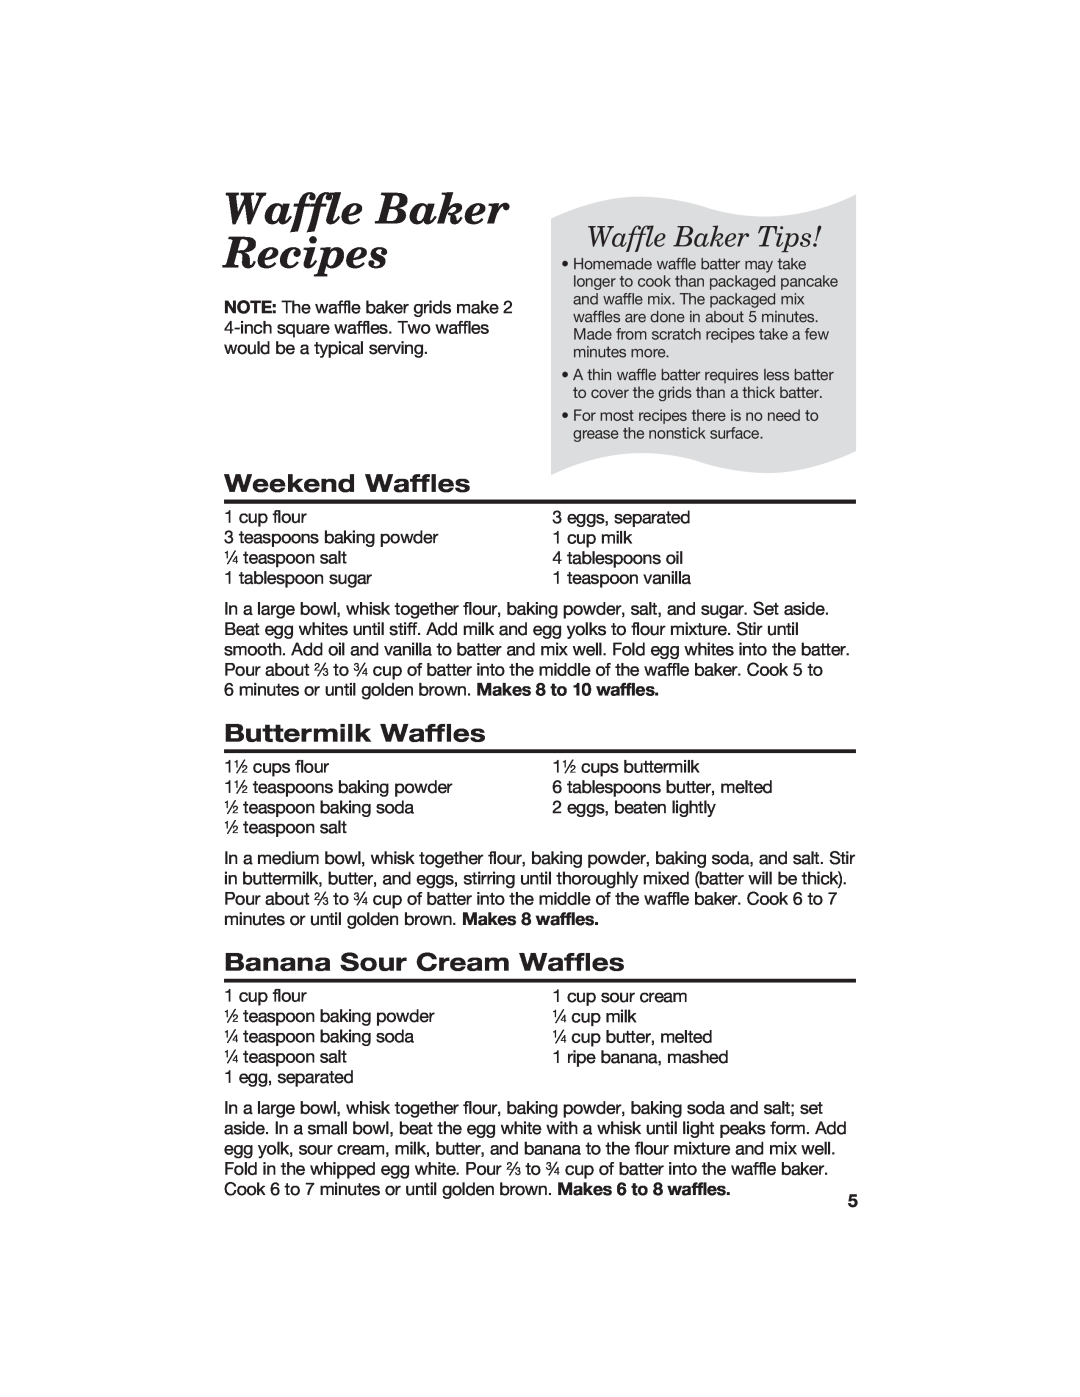 Hamilton Beach 840055700 manual Waffle Baker Recipes, Weekend Waffles, Buttermilk Waffles, Banana Sour Cream Waffles 